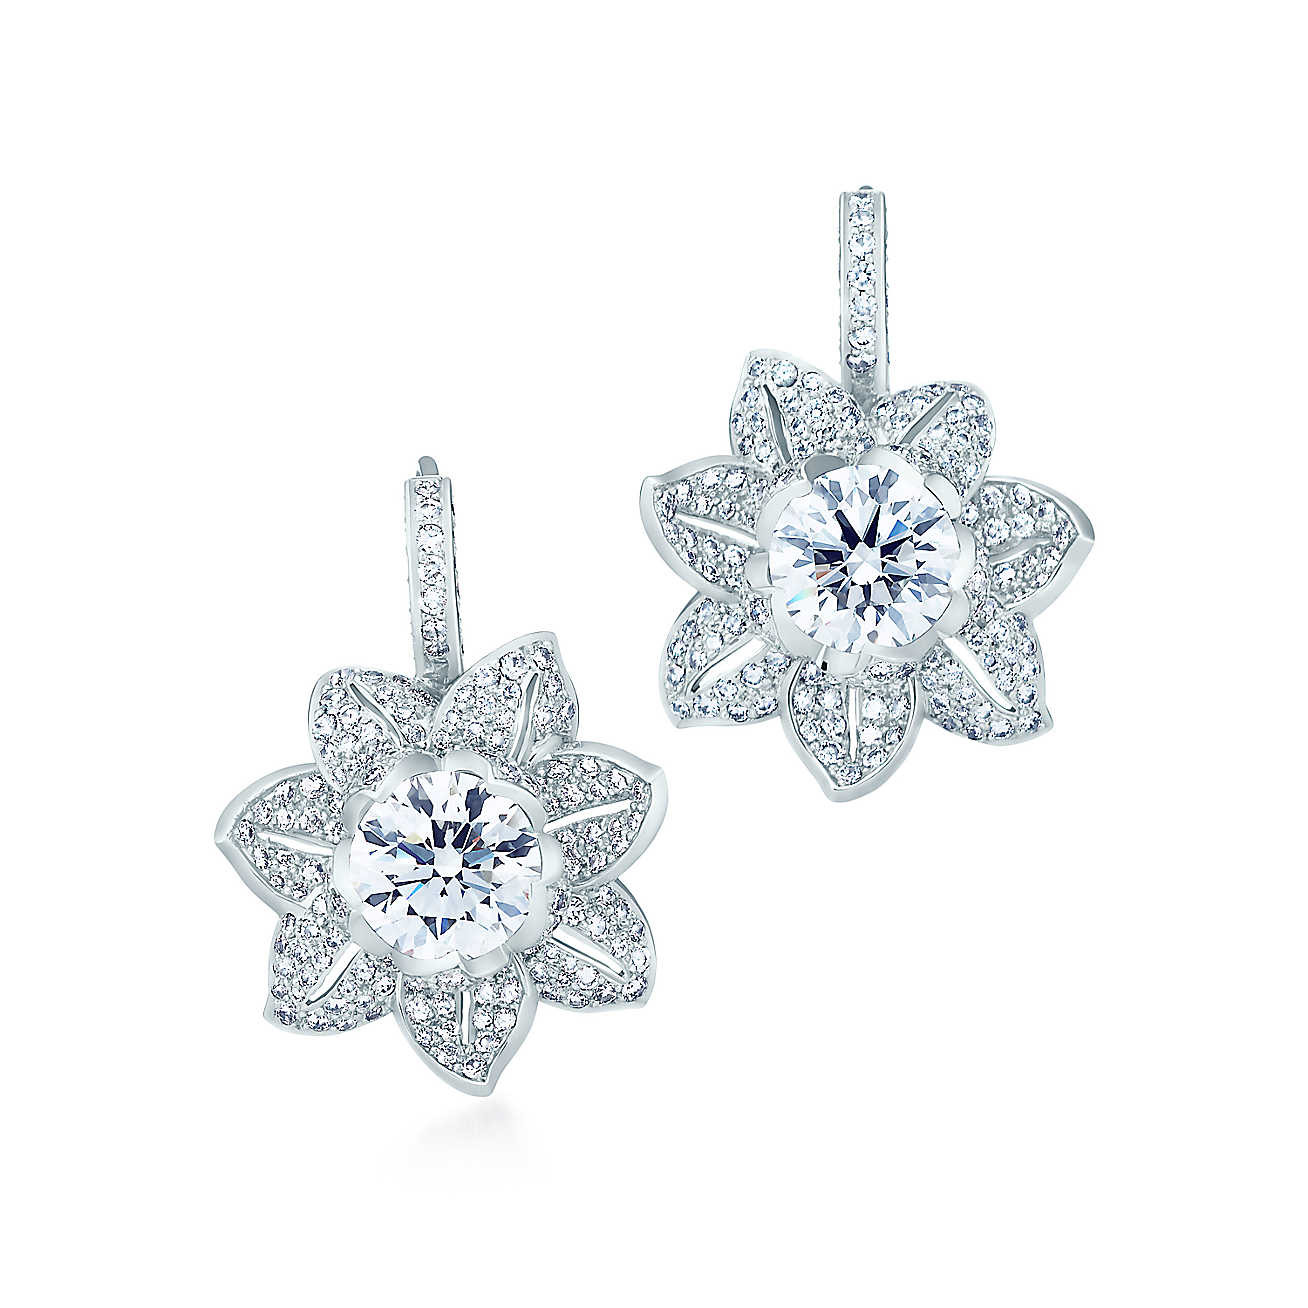 Tiffany Diamond Earrings
 Diamond flower earrings in platinum